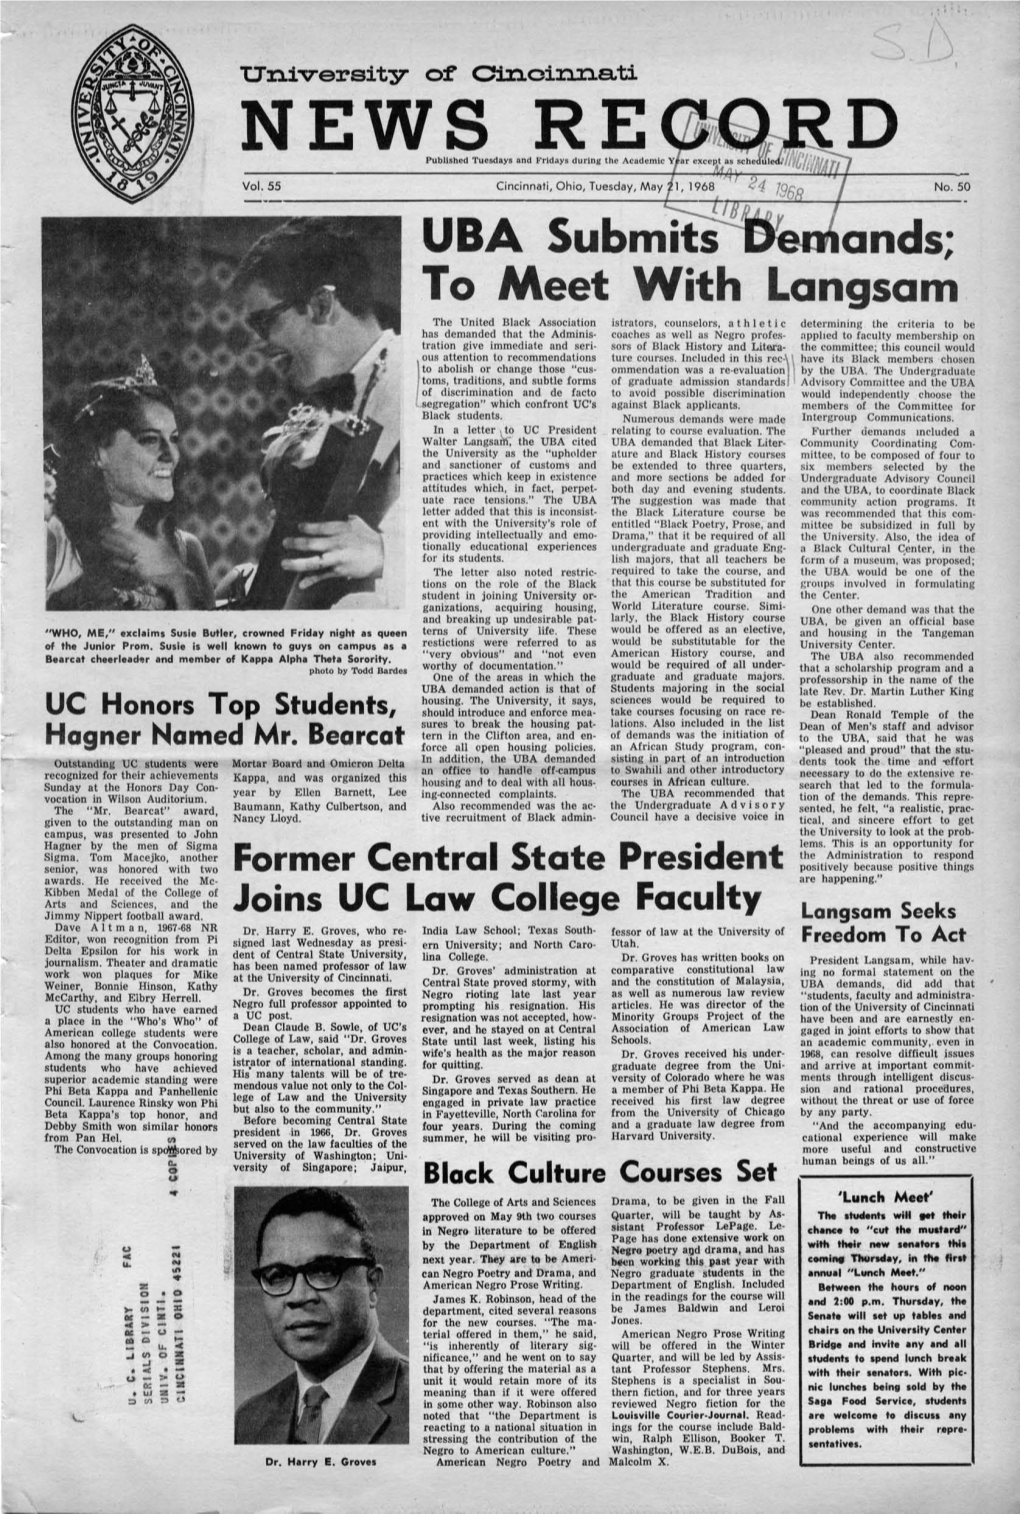 University of Cincinnati News Record. Tuesday, May 21, 1968. Vol. LV, No